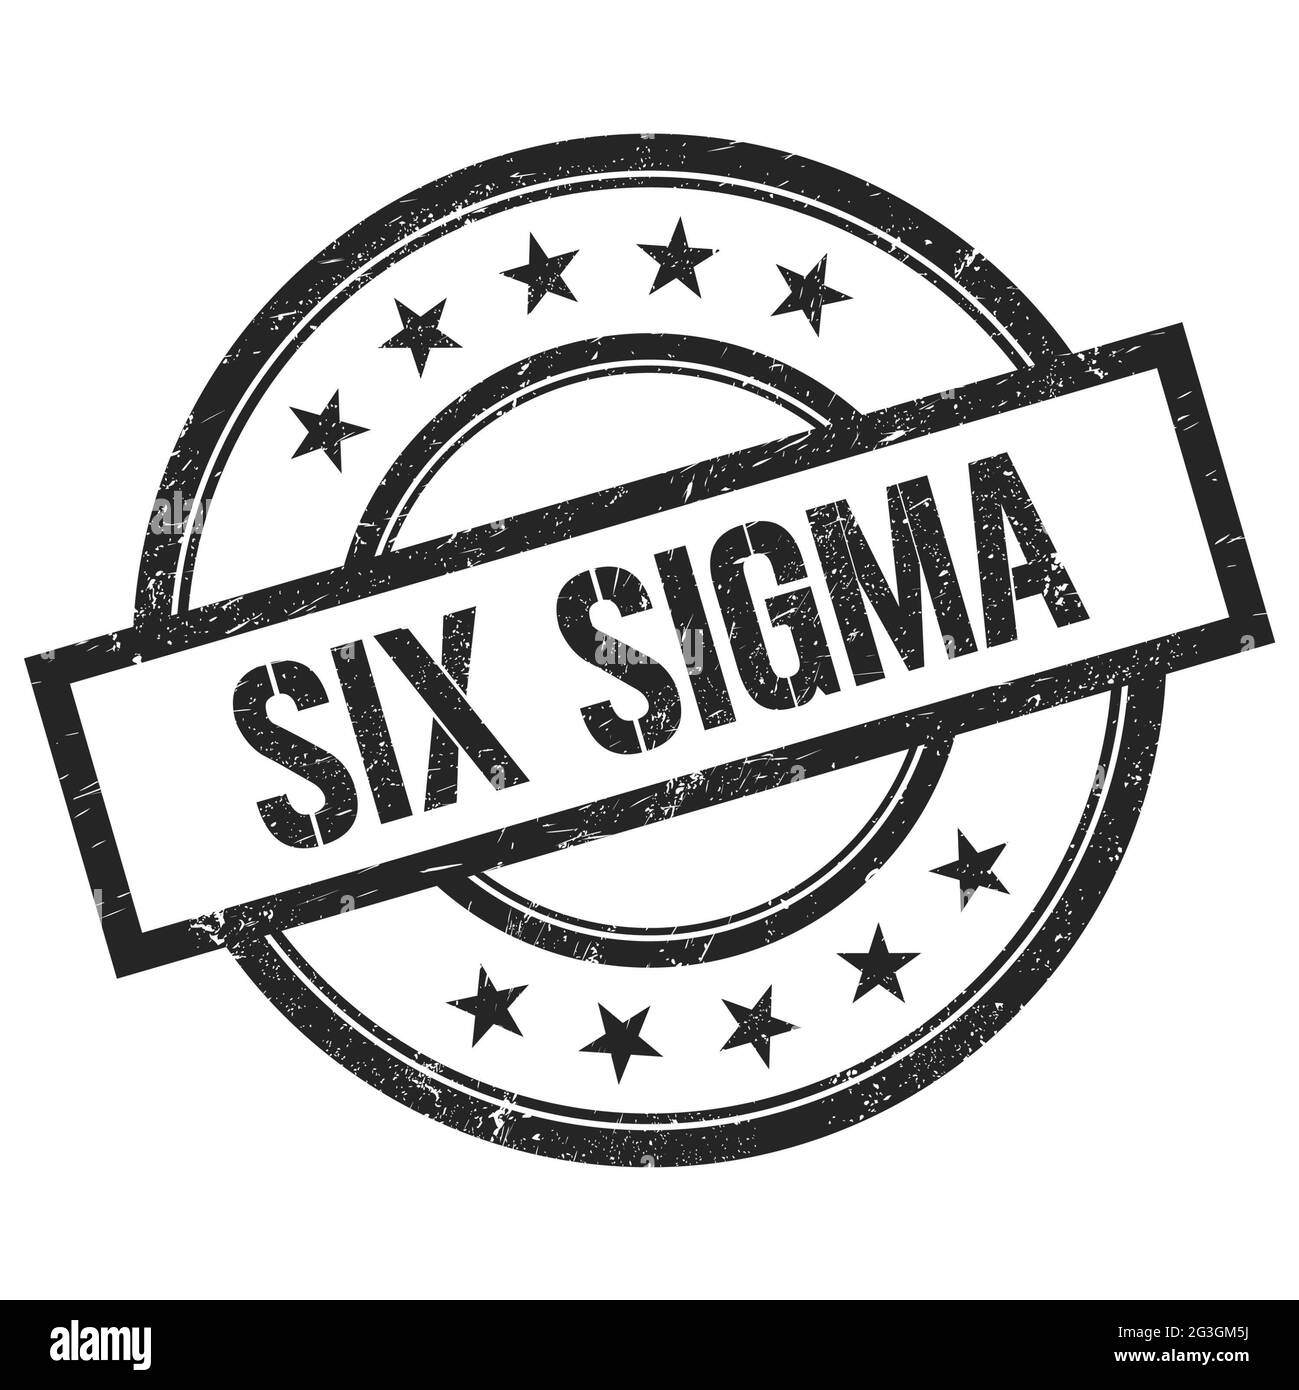 Share more than 134 six sigma logo latest